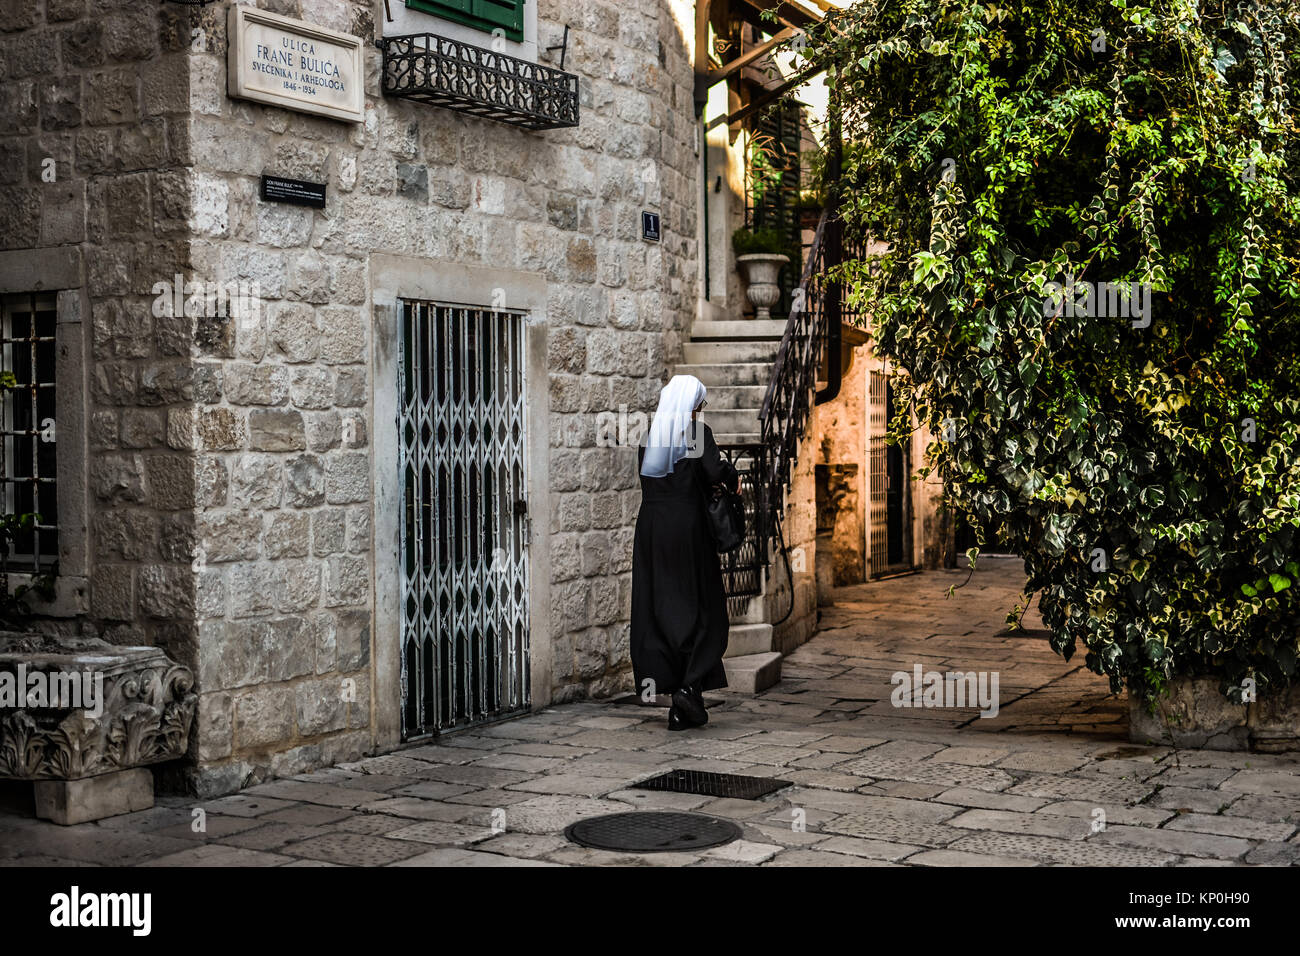 A nun wearing a habit walks alone in the ancient stone city of Split Croatia Stock Photo